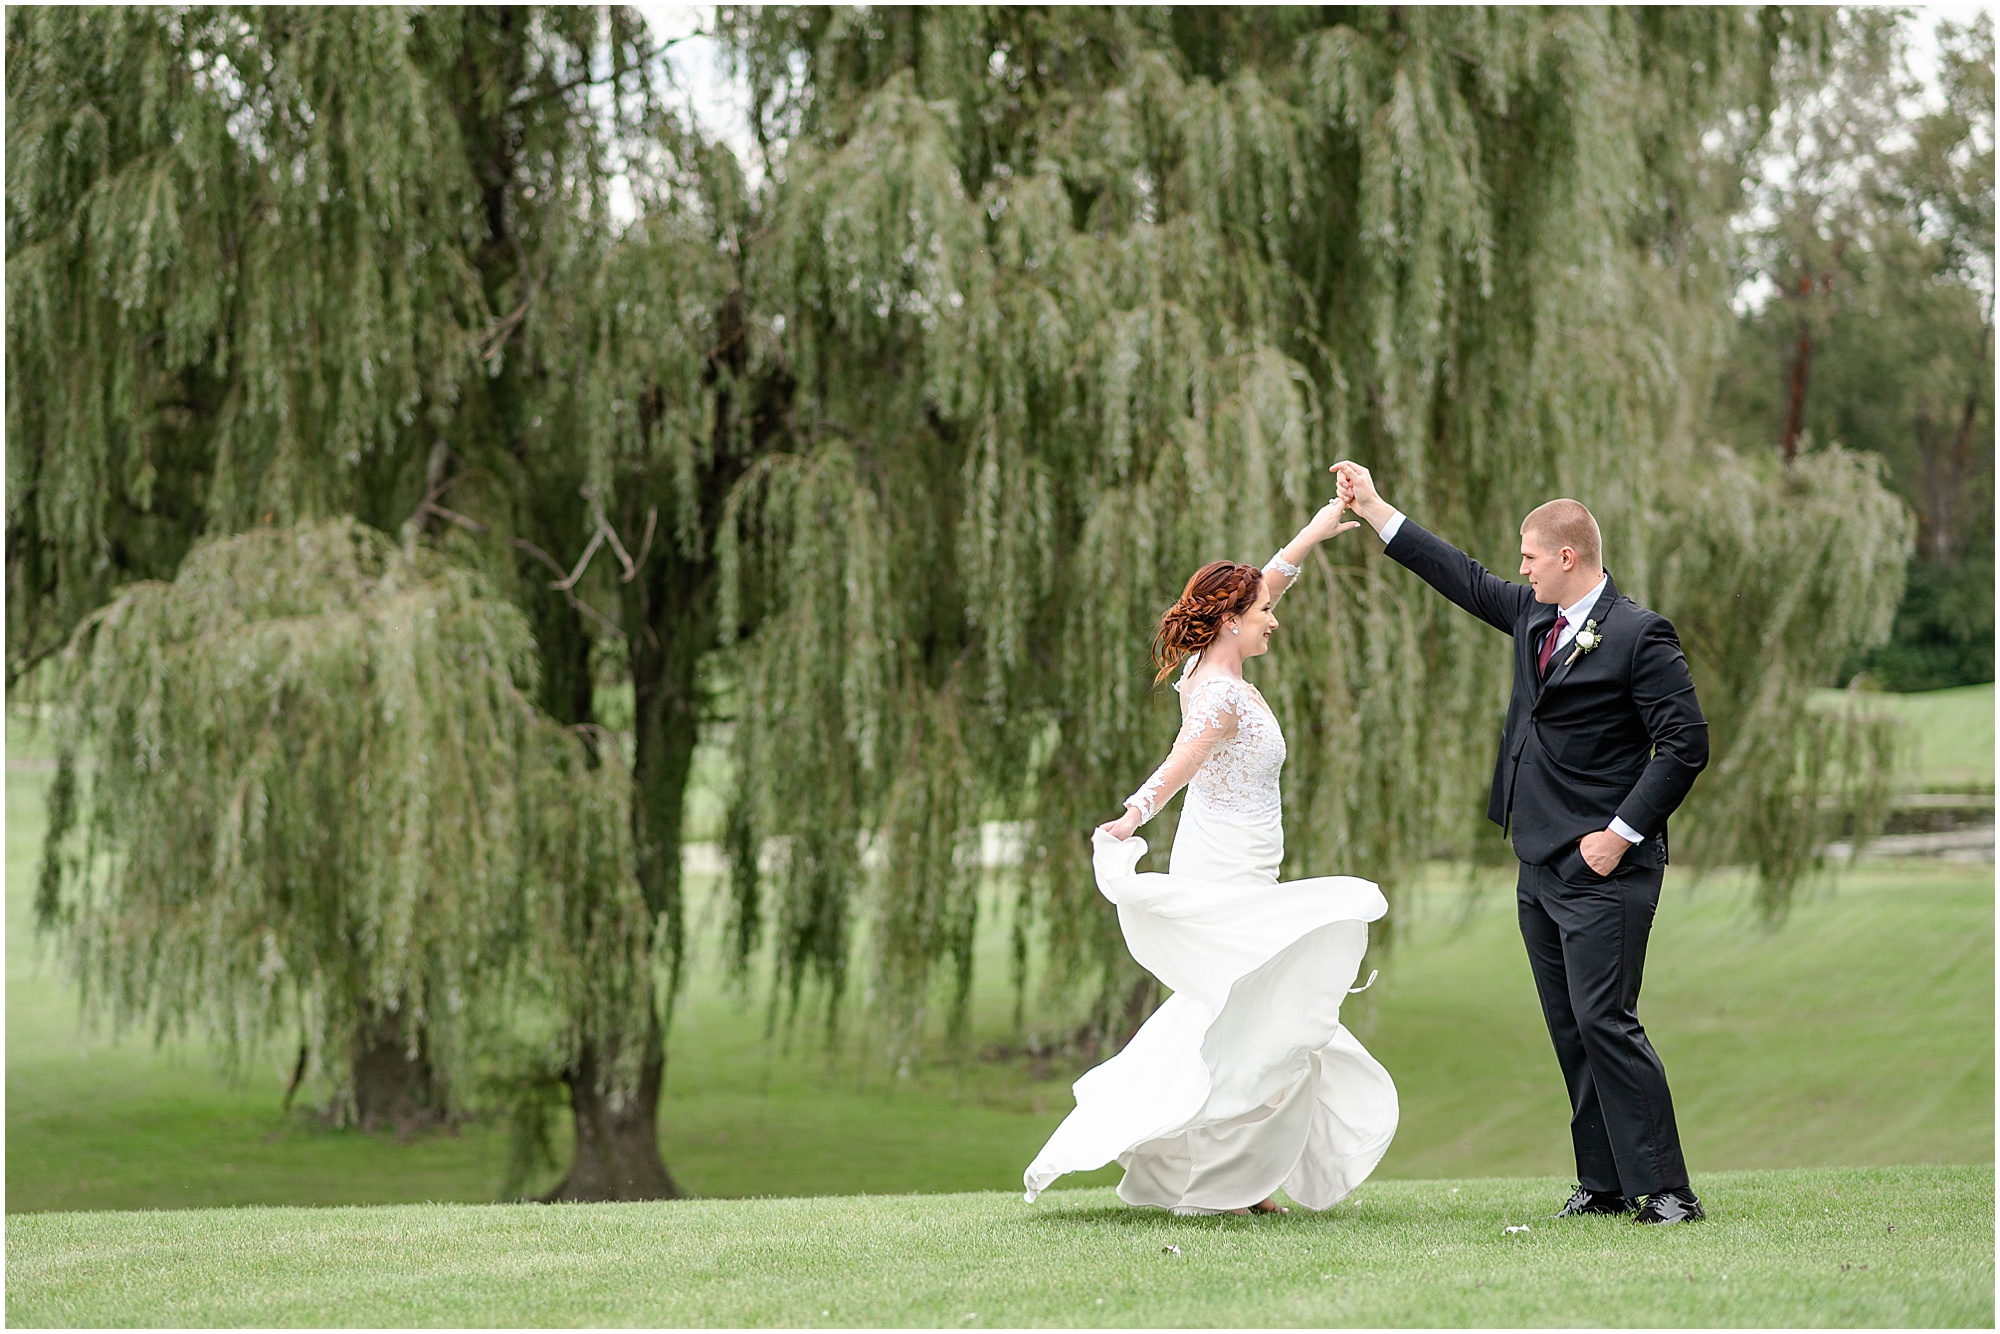 Kaitlin and Jon dance at their Fox Hills Golf Course Wedding